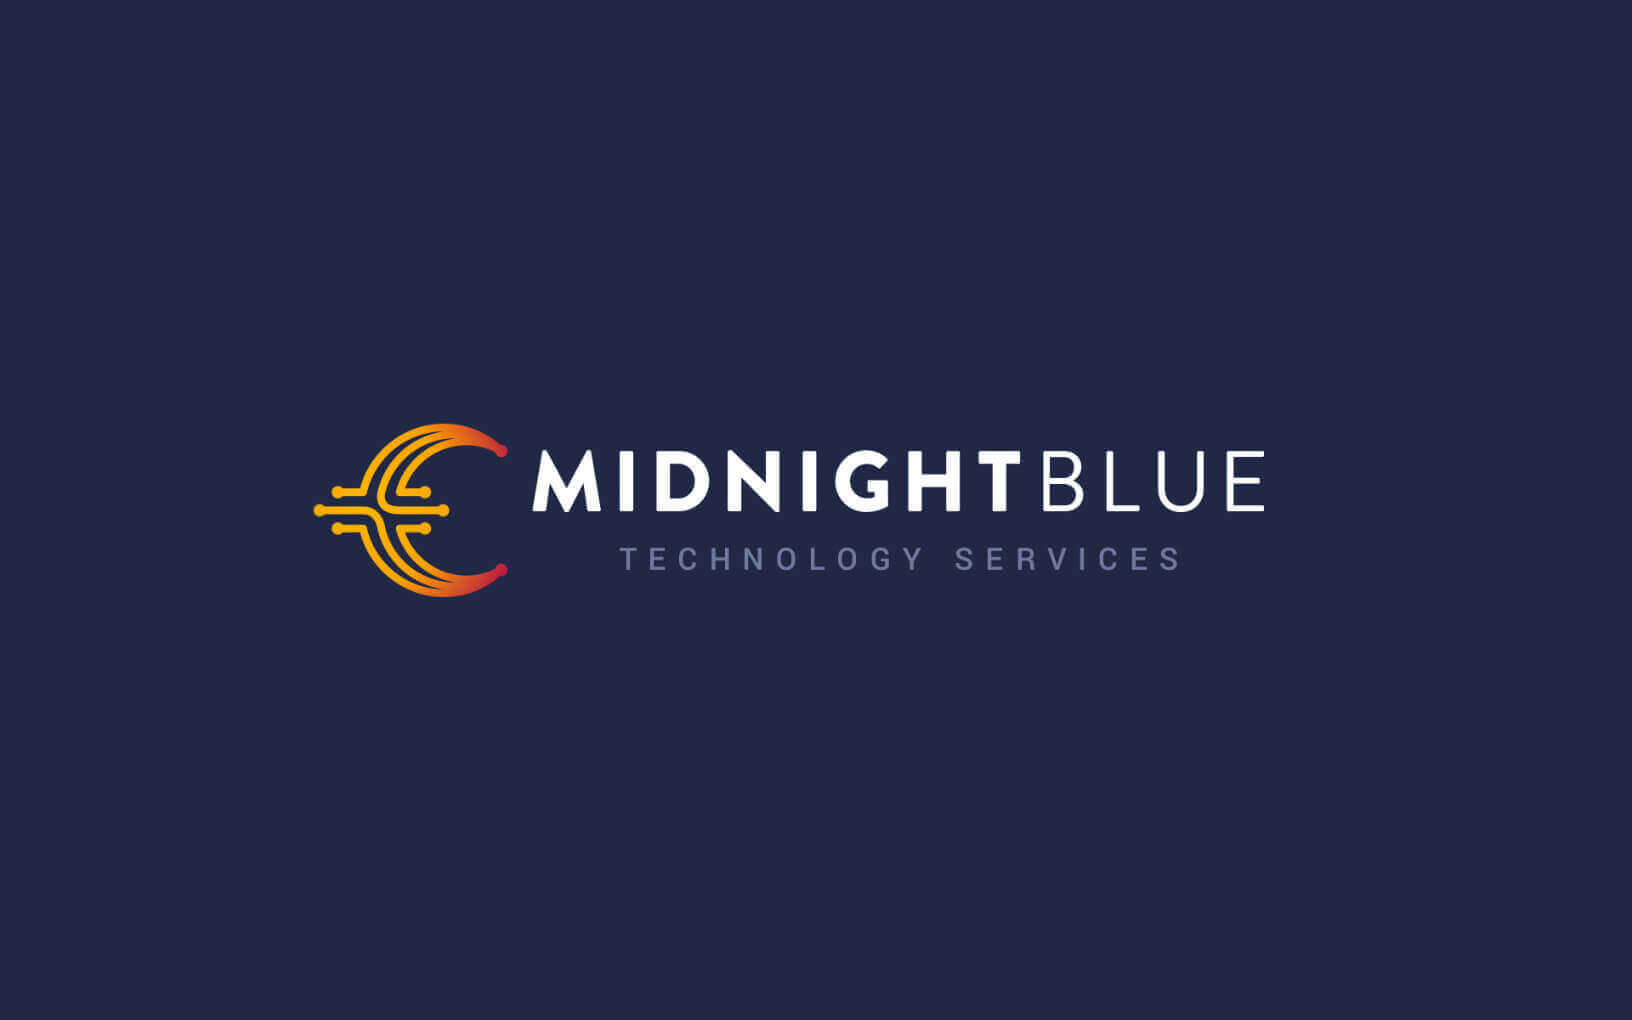 logo-9-midnight-blue@2x